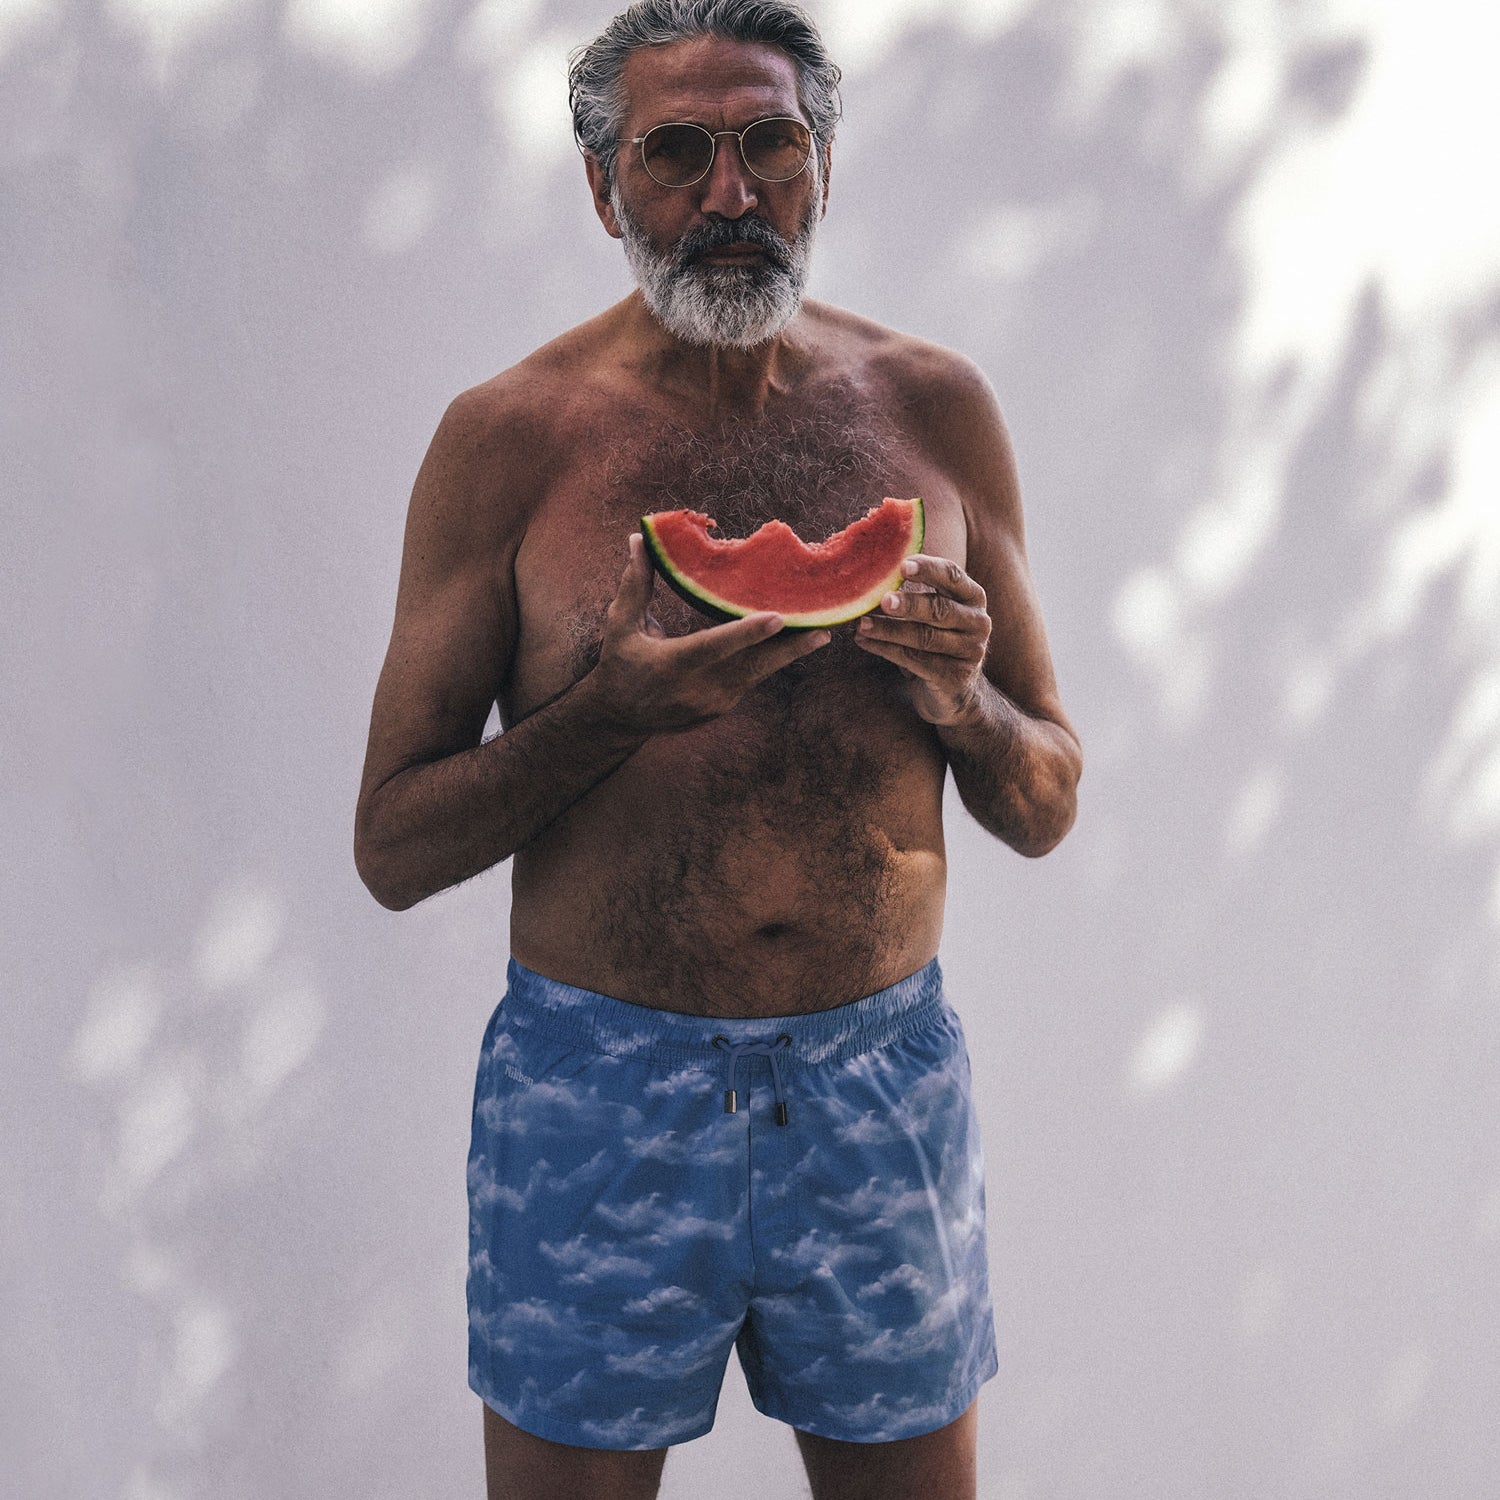 man with blue swim trunks eating watermelon